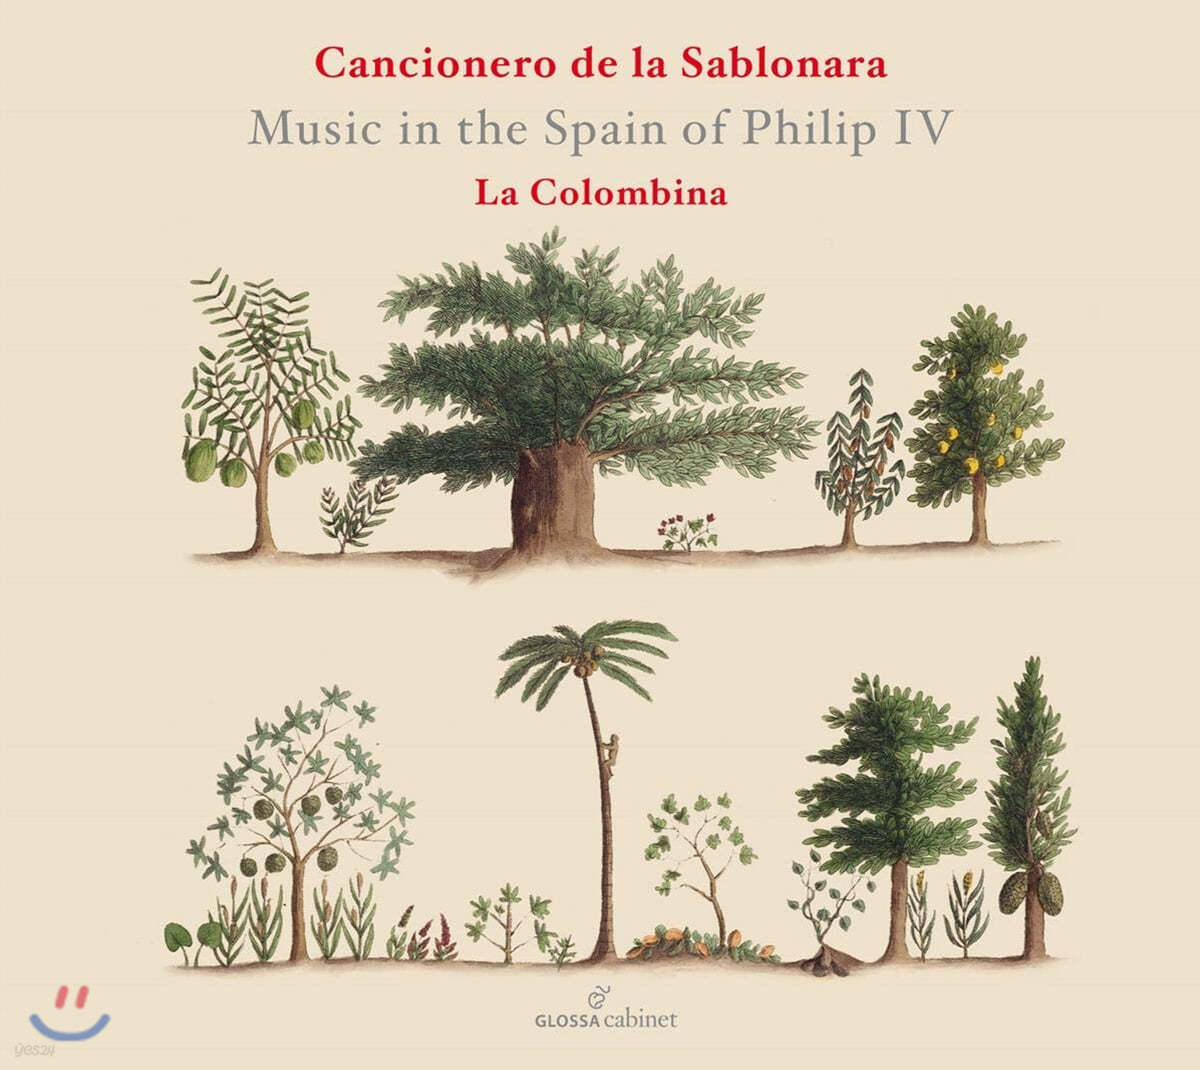 La Colombina 스페인 폴리포니 세속 성악곡 - 펠리페 4세 시대의 스페인 음악 (Cancionero de la Sablonara) 